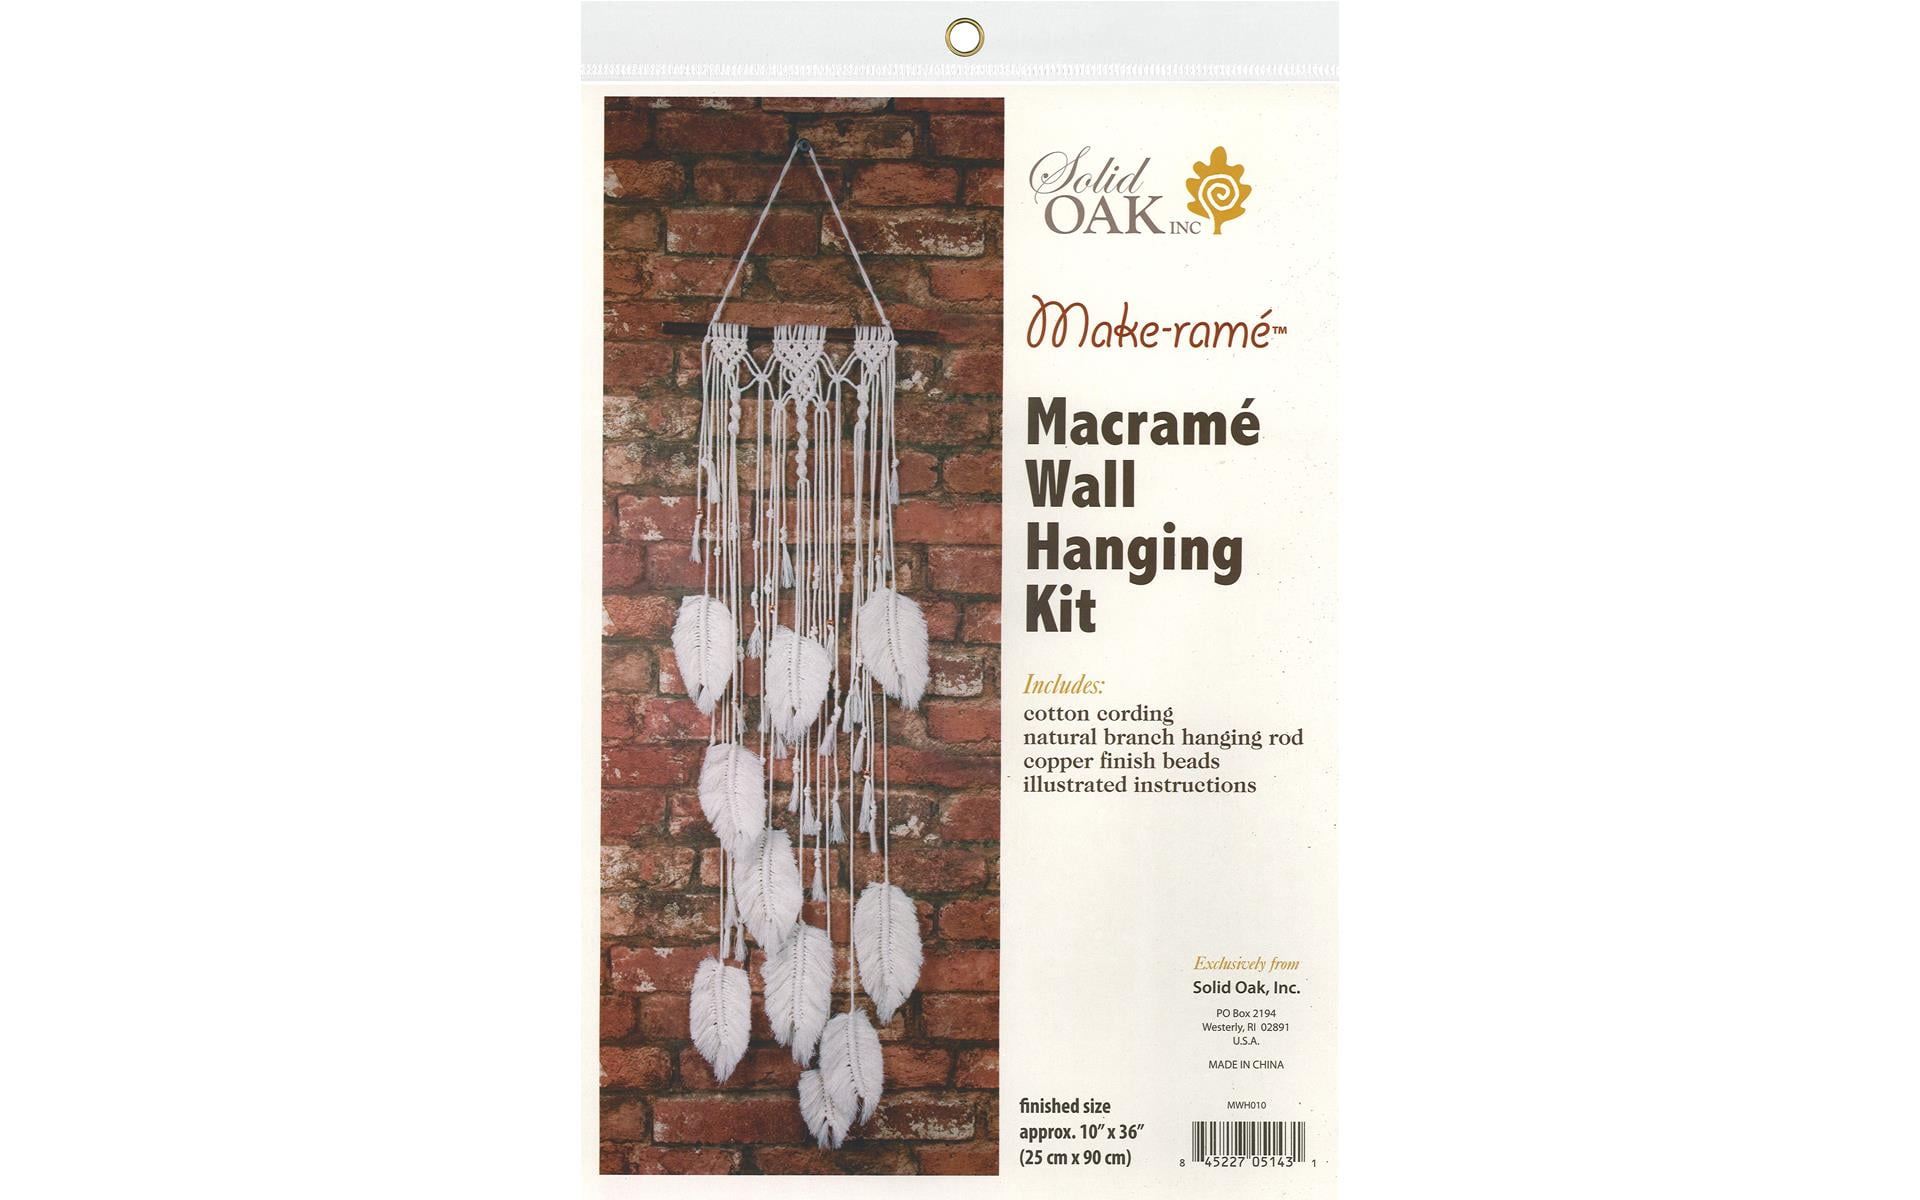 Solid Oak Macrame Kits